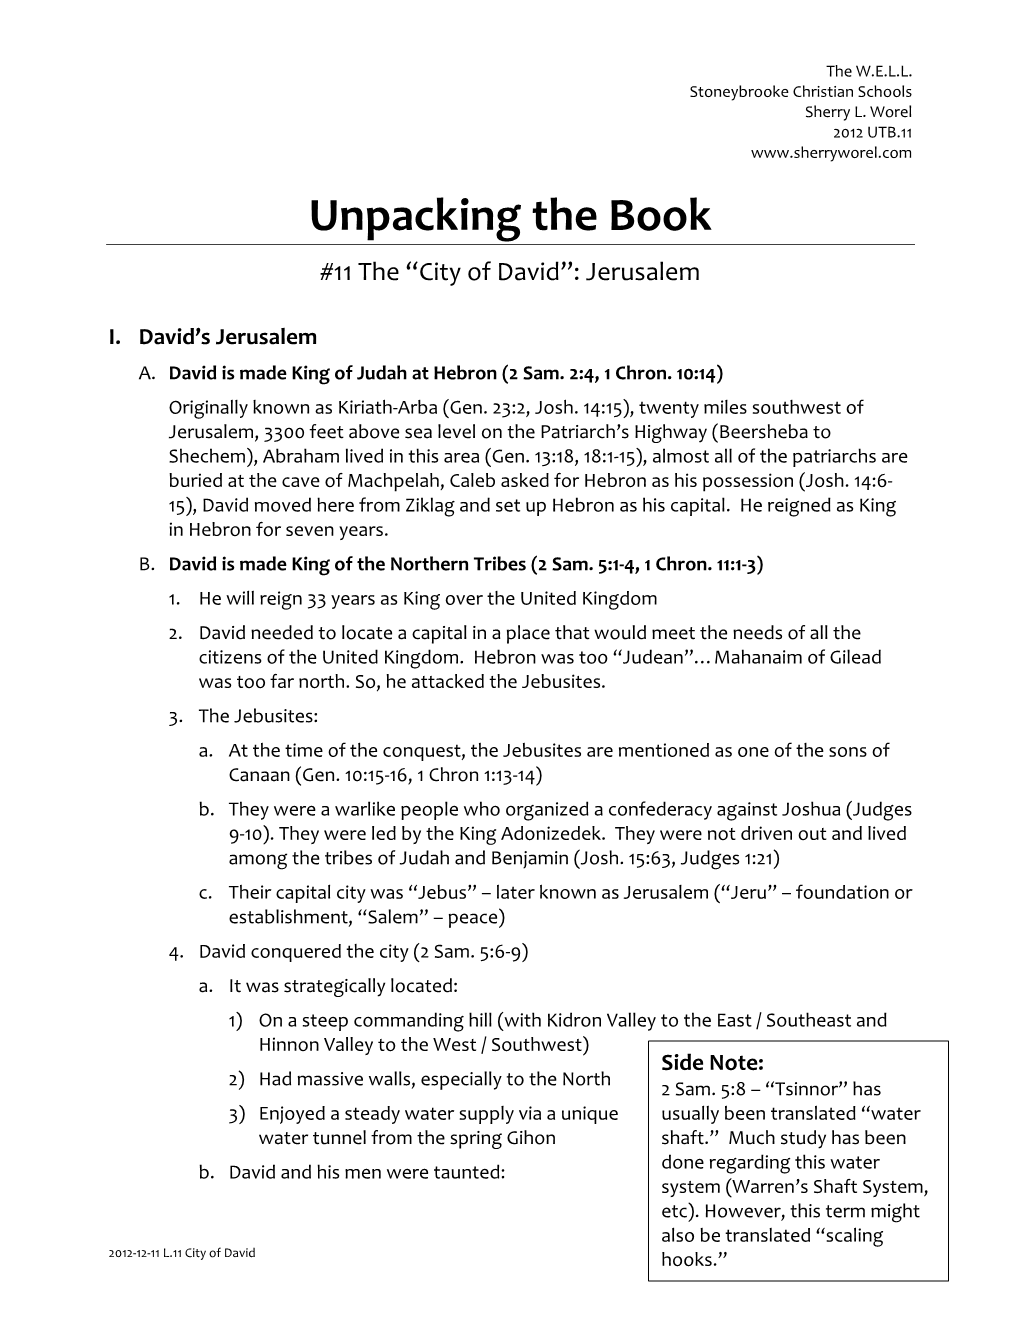 Unpacking the Book #11 the “City of David”: Jerusalem